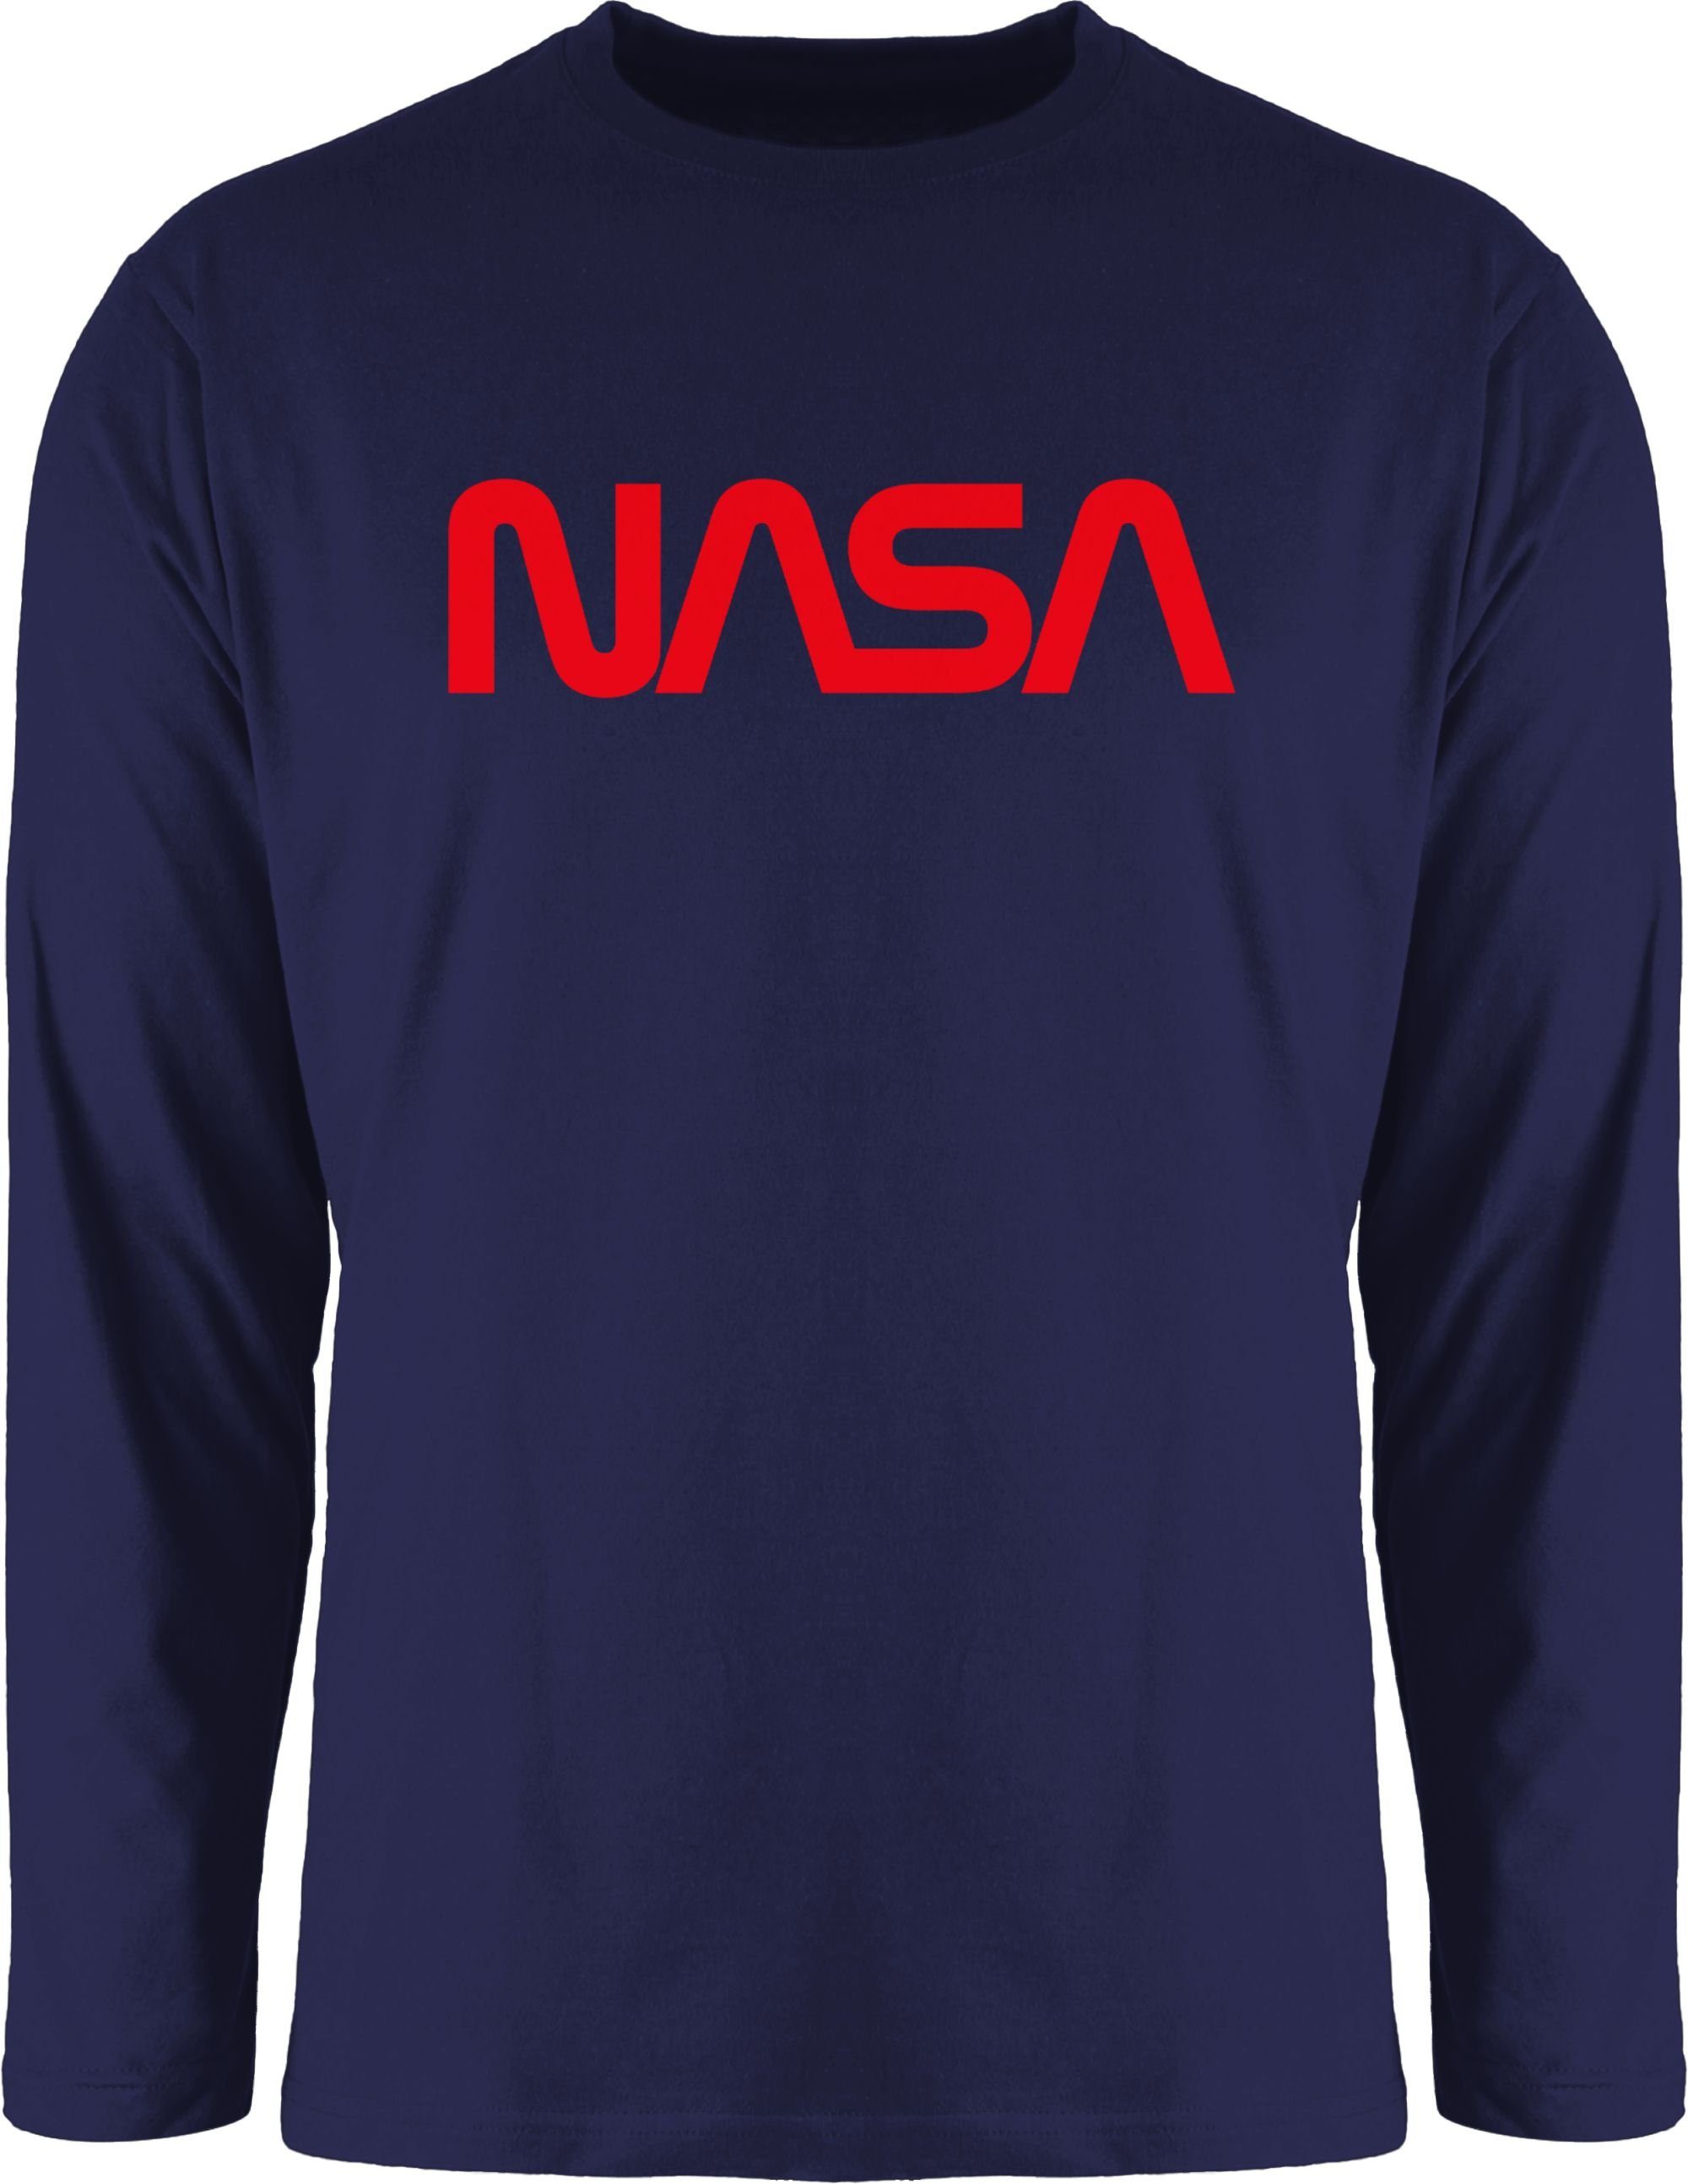 Shirtracer Rundhalsshirt Nasa - Raumfahrt Astronaut Mondlandung Weltraum Nerd Geschenke 1 Navy Blau